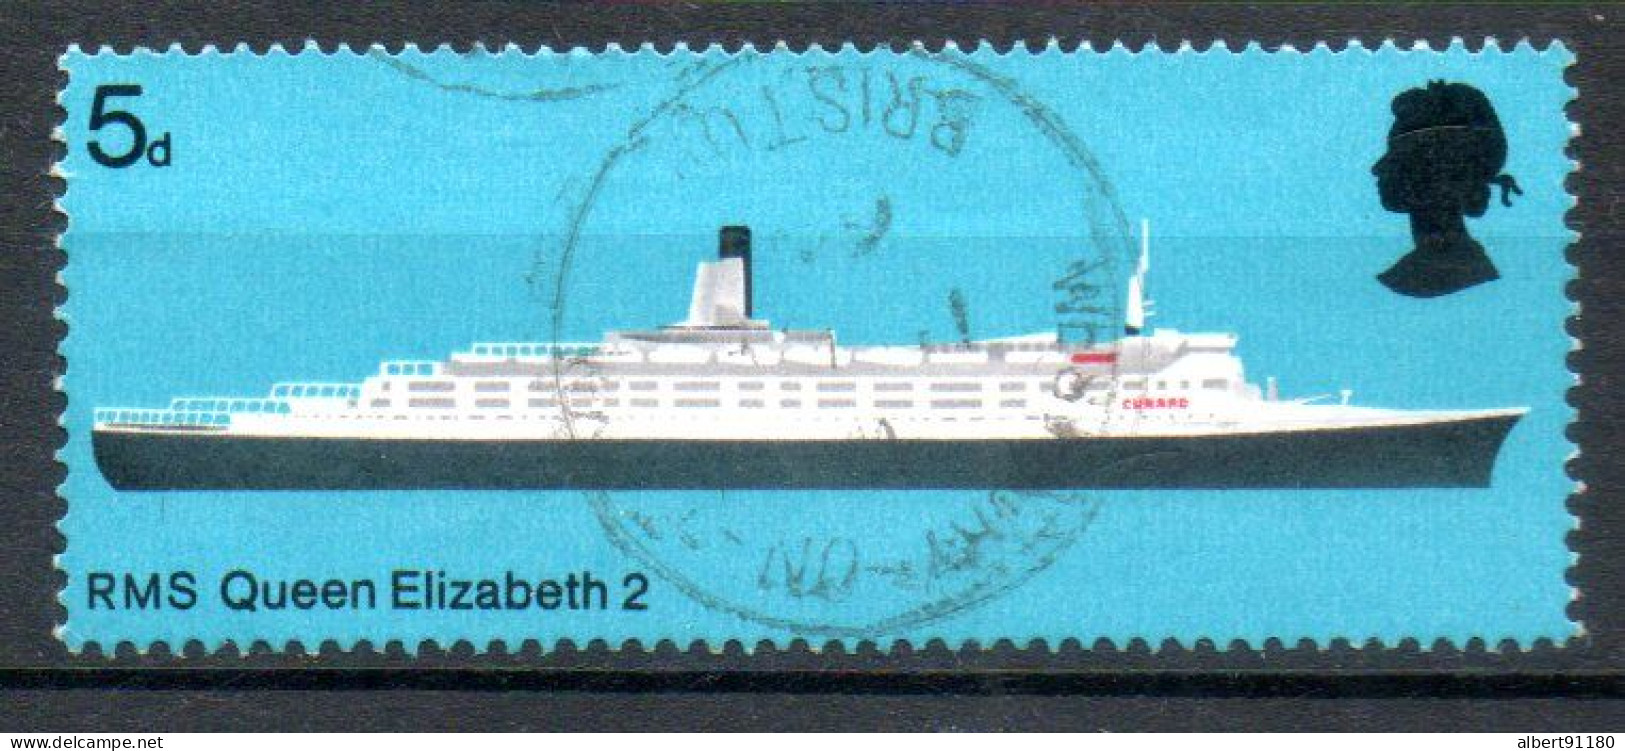 GRANDE-BRETAGNE Queen Elisabeth 1969 N° 549 - Used Stamps